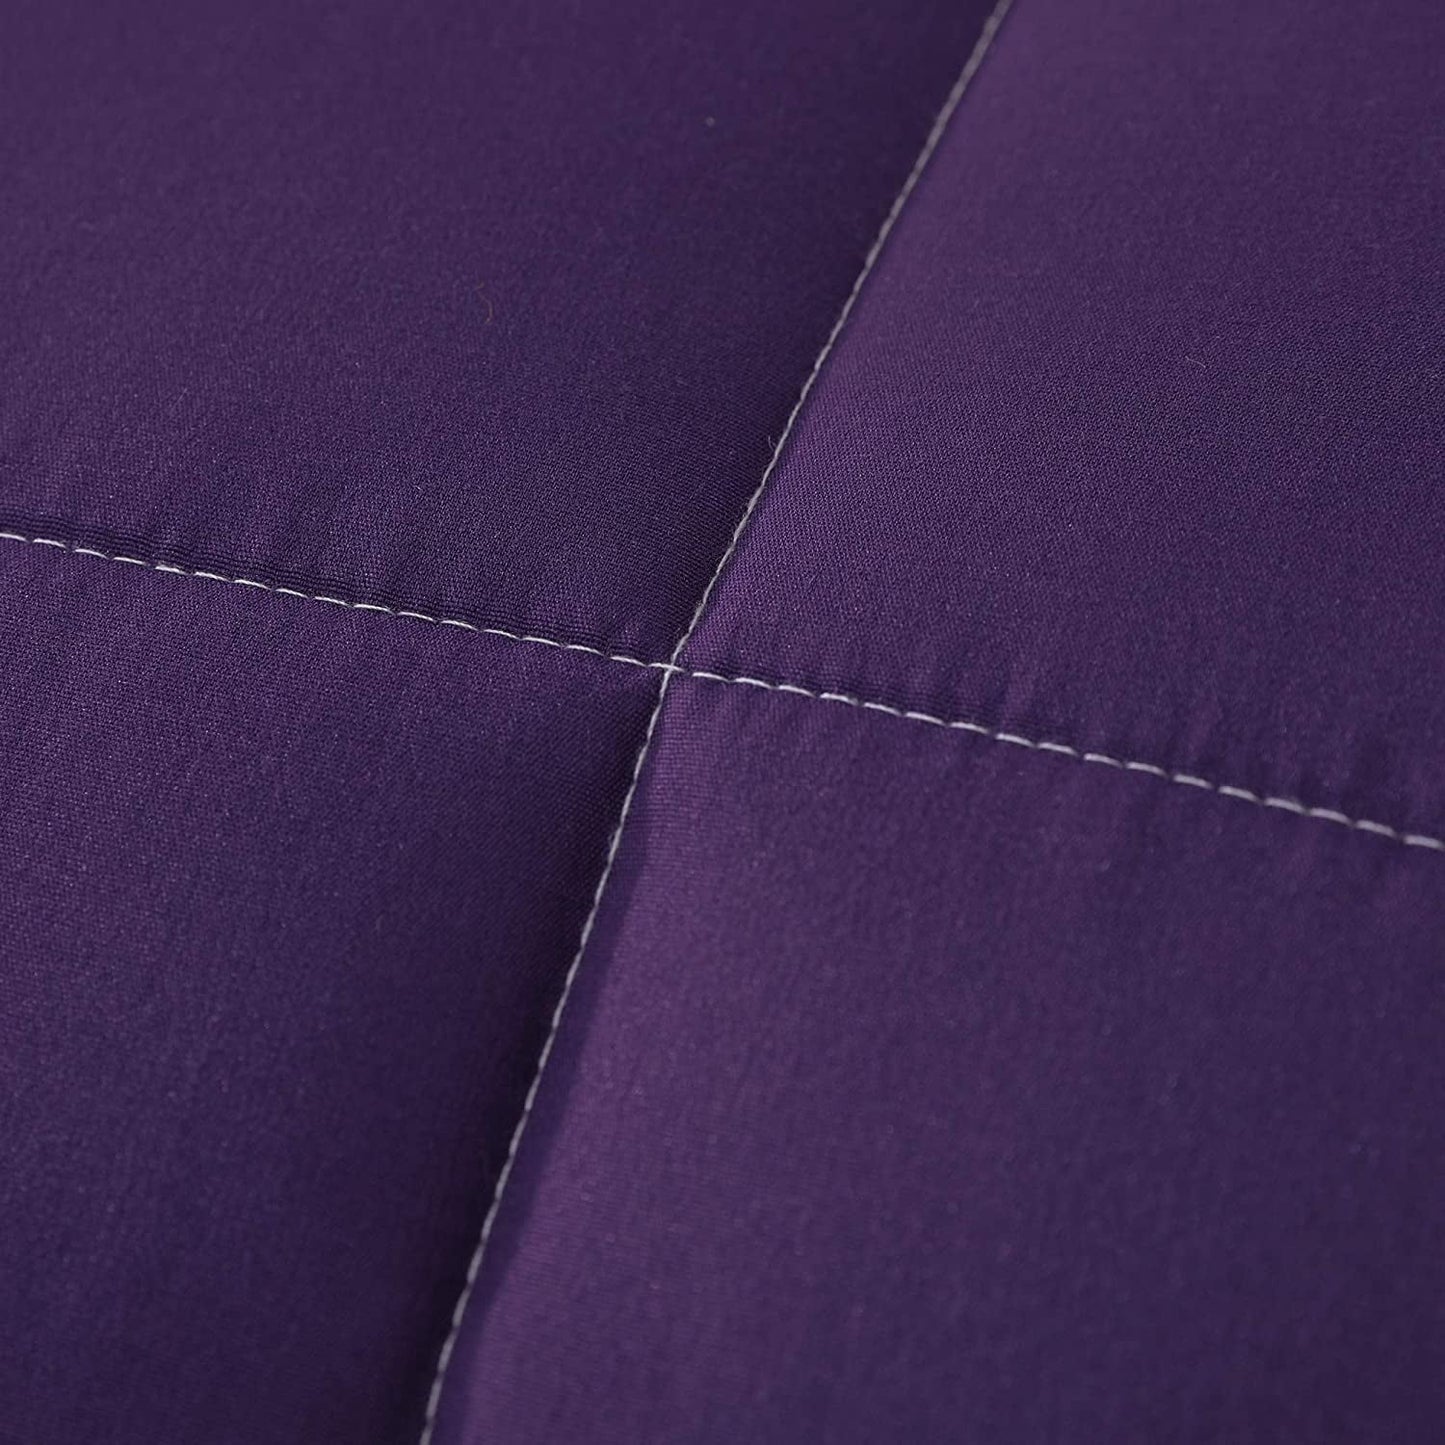 Exclusivo Mezcla Lightweight Reversible 3-Piece Comforter Set All Seasons, Down Alternative Comforter with 2 Pillow Shams, King Size, Deep Purple/ Lilac